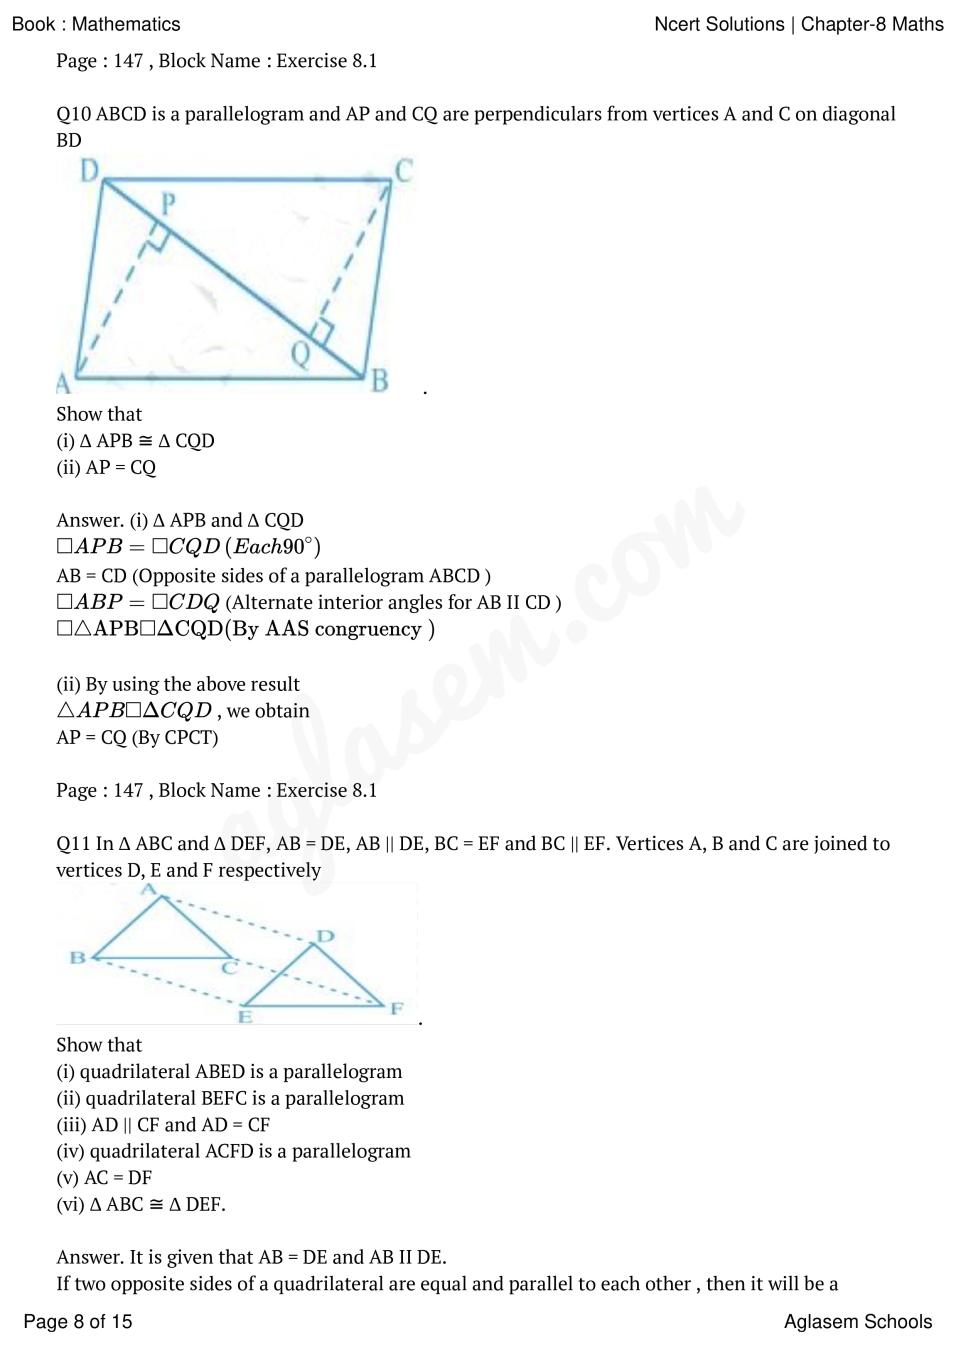 Ncert Solutions For Class 9 Maths Chapter 8 Quadrilaterals Pdf 8134